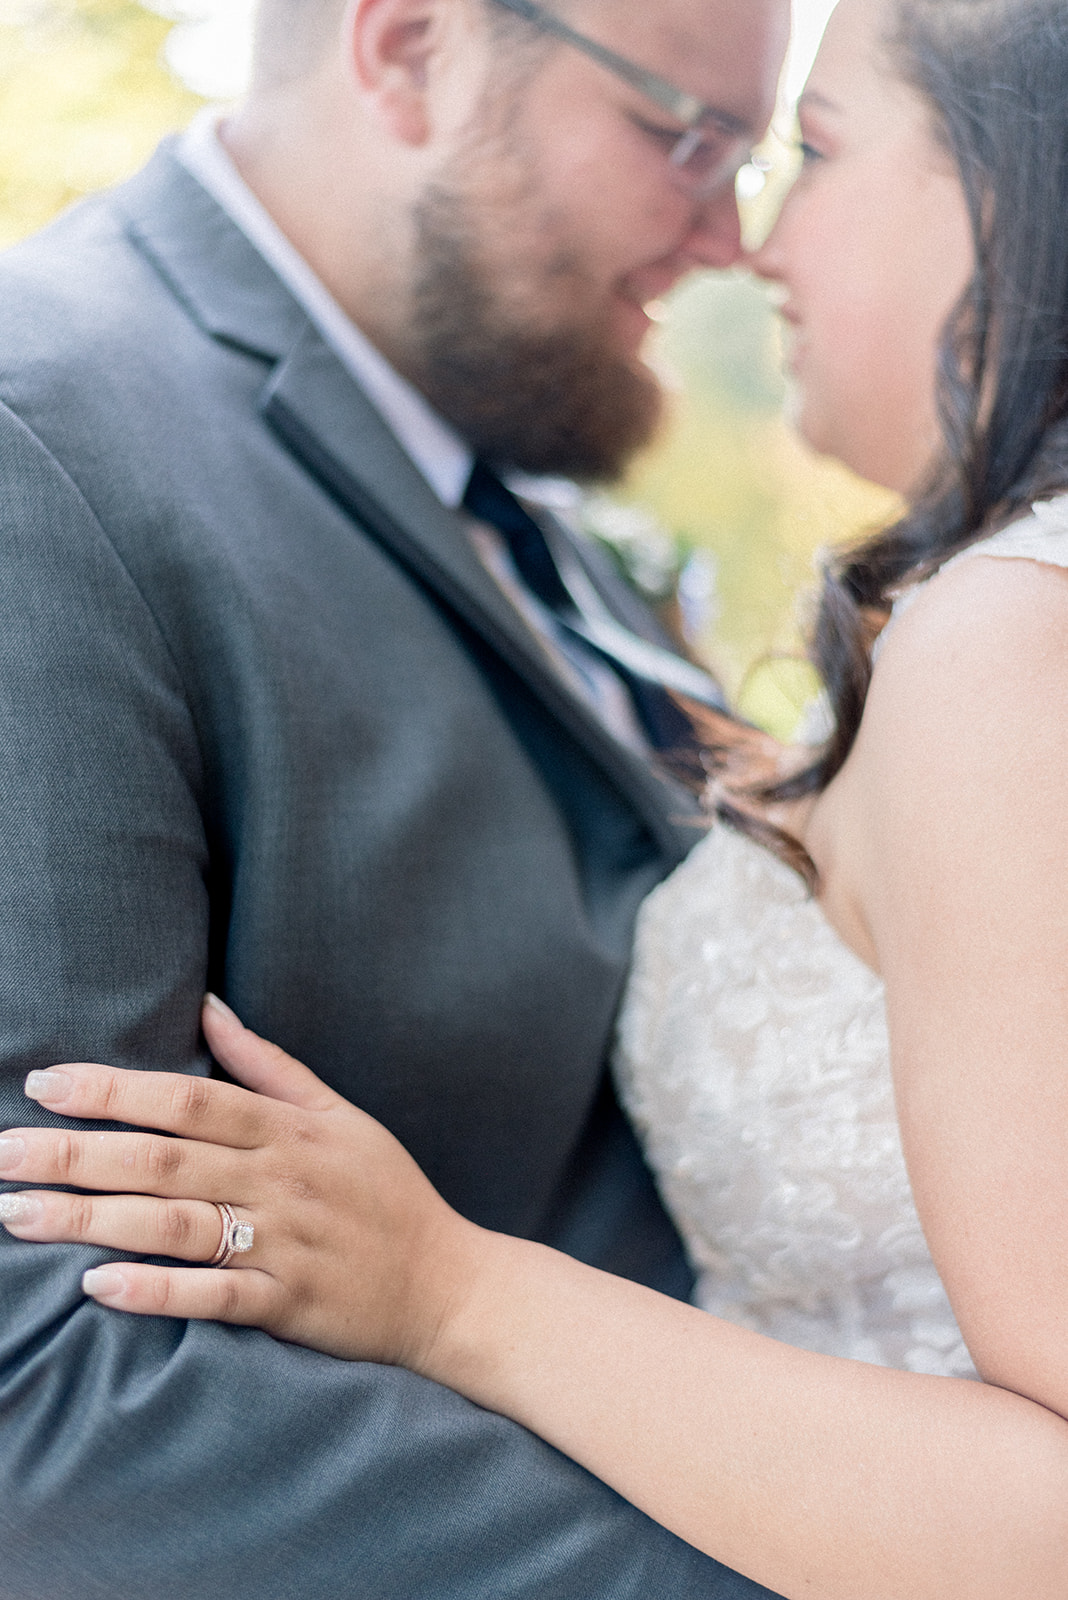 Pennsylvania wedding photographer captures close up of wedding ring